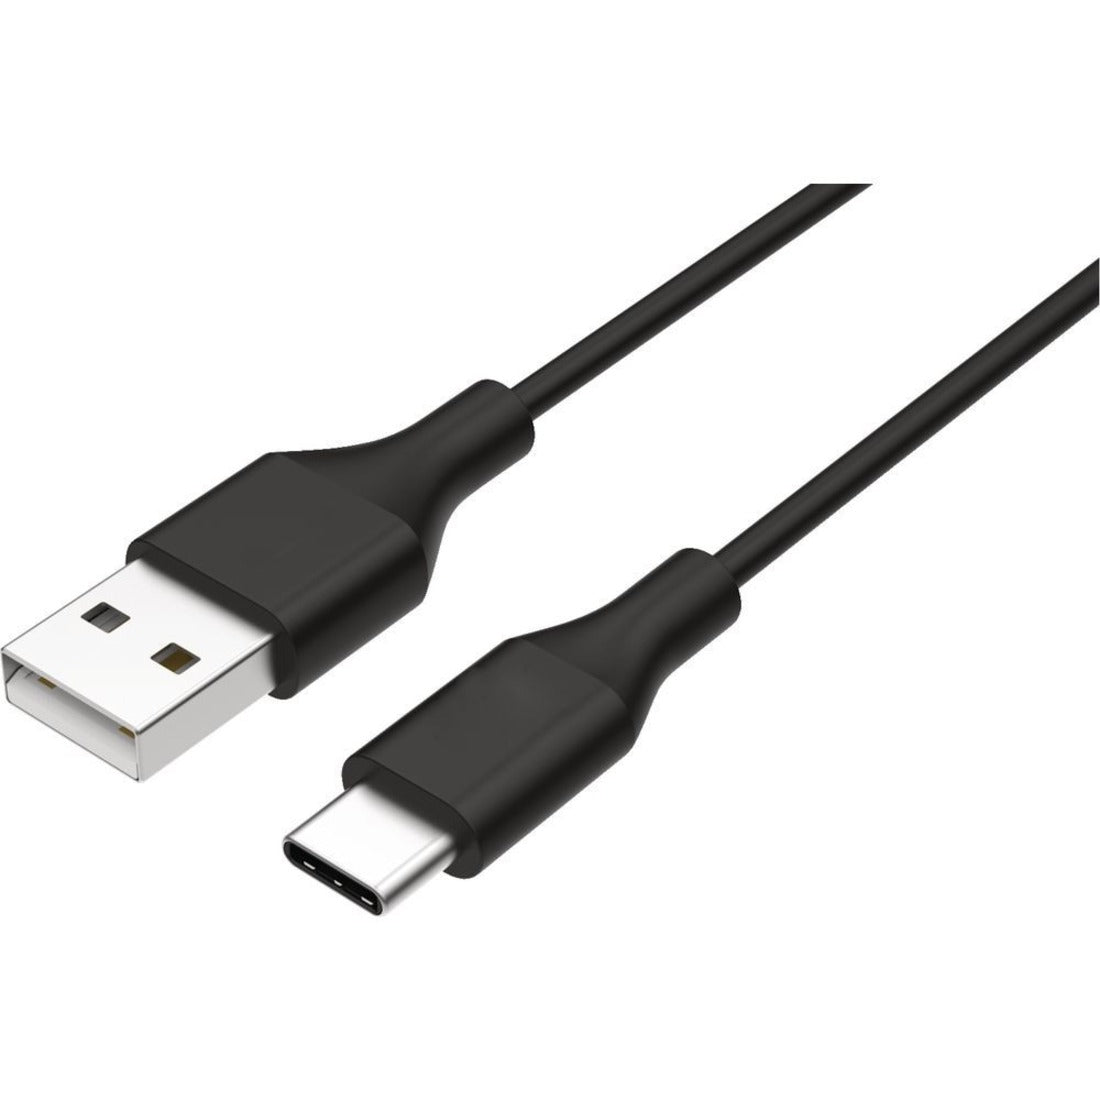 4XEM 4XSAMKITUSBCB3 Samsung USB-C 3FT Charger Kit (Black), 3ft Cable, 1 Year Warranty